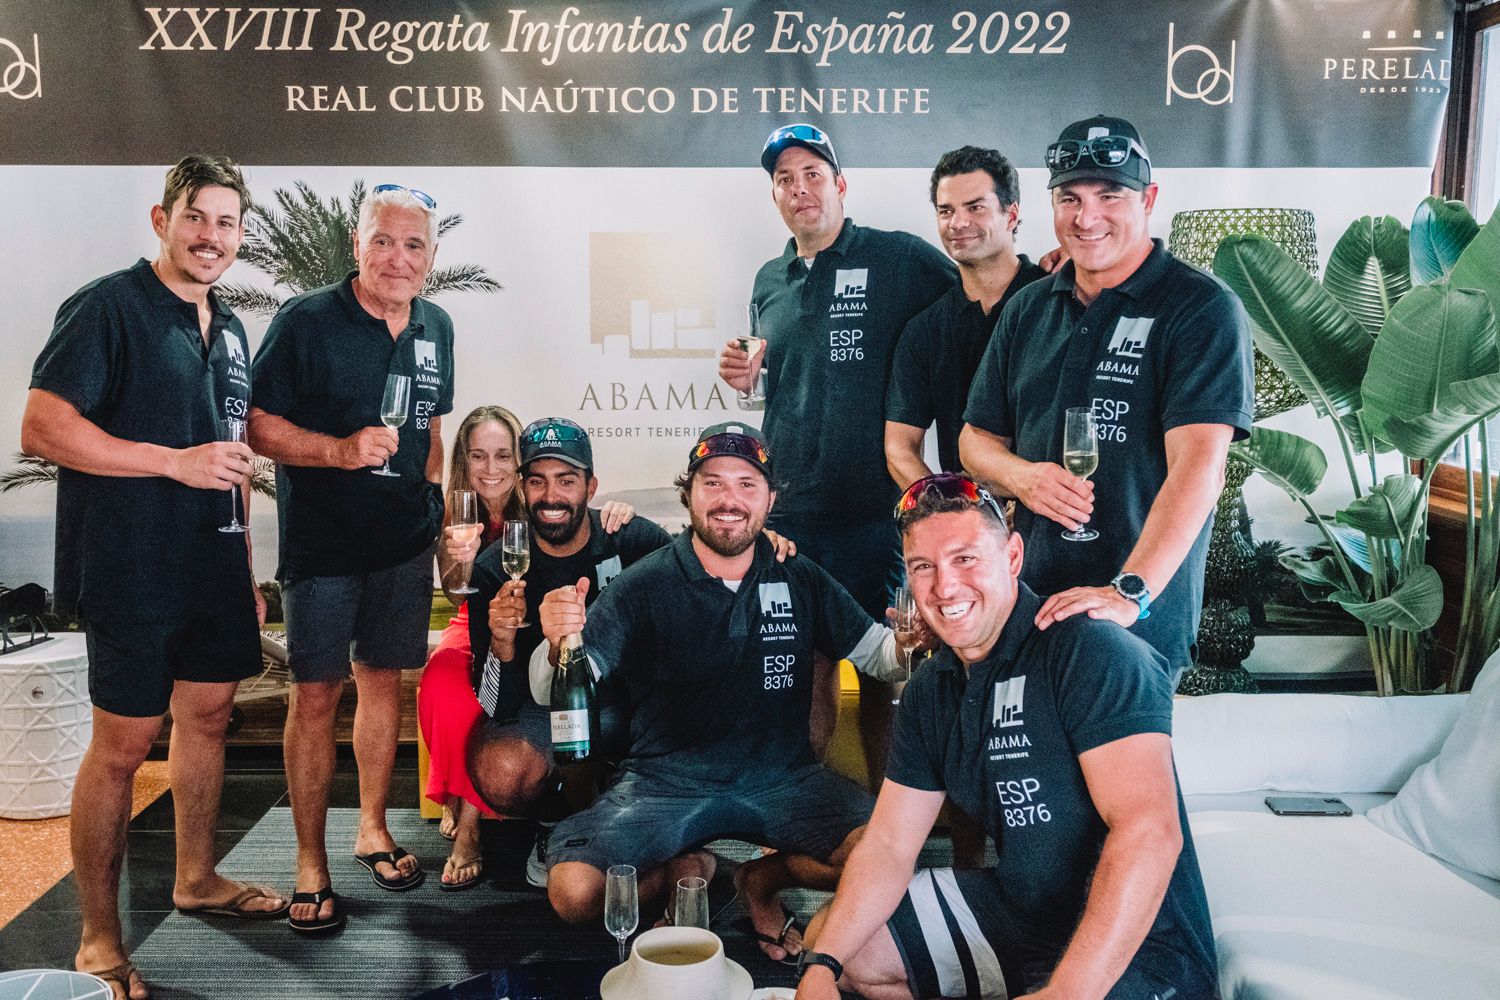 Abama Resort Tenerife. XXVIII Regata Trofeo Infantas de España – V Centenario 1ª Vuelta al Mundo